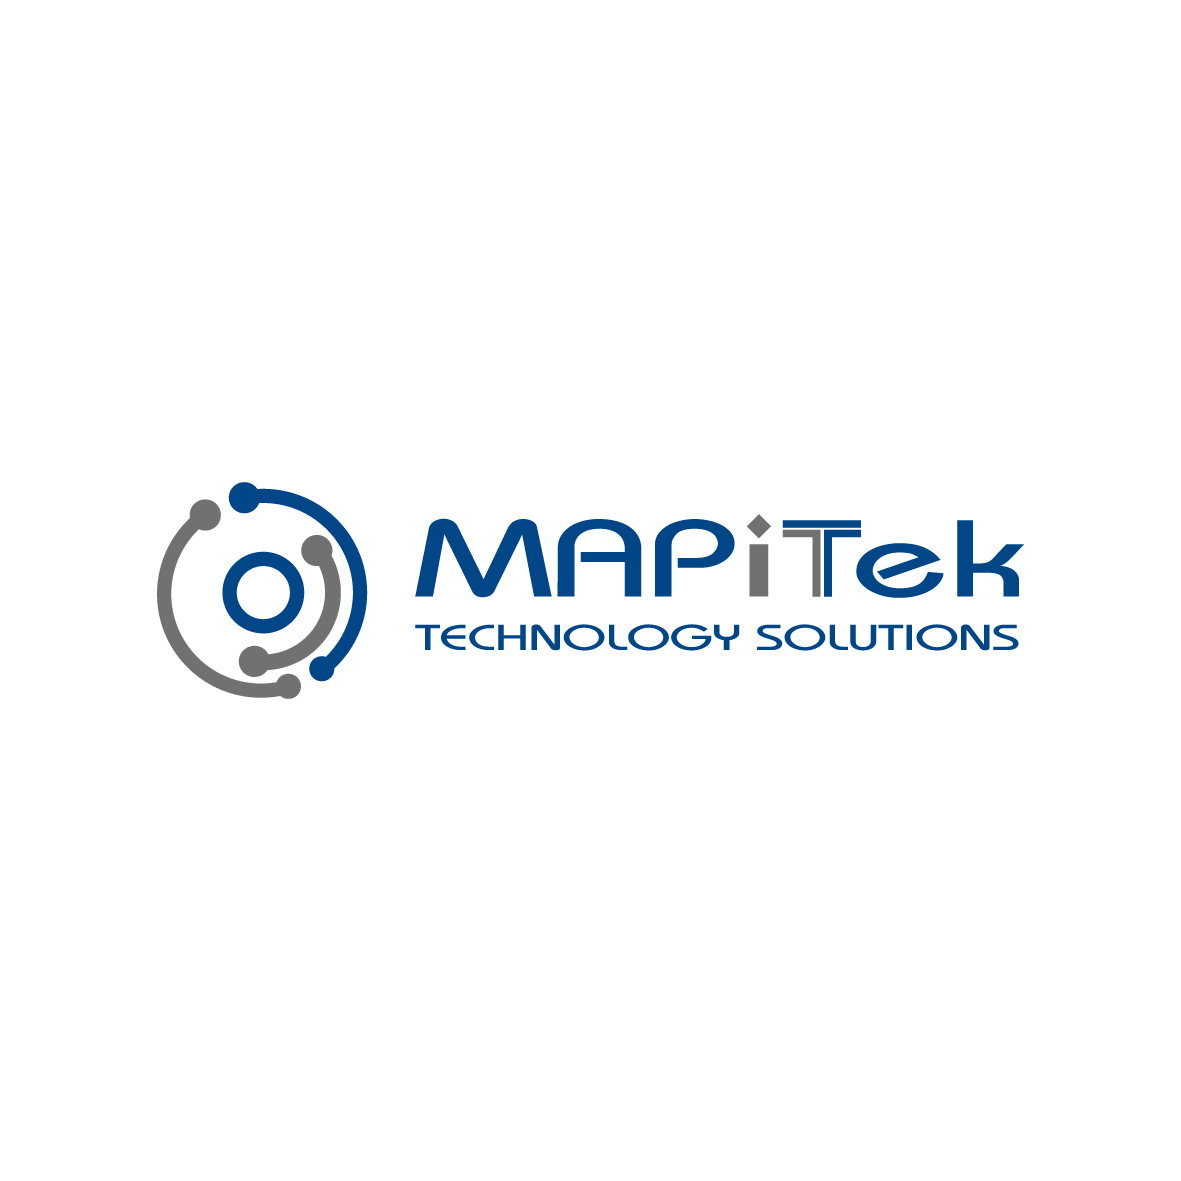 MAPiTek: Ολοκληρωμένες υπηρεσίες τεχνολογίας πληροφοριών (ΙΤ) από τον Όμιλο MAP S.Platis